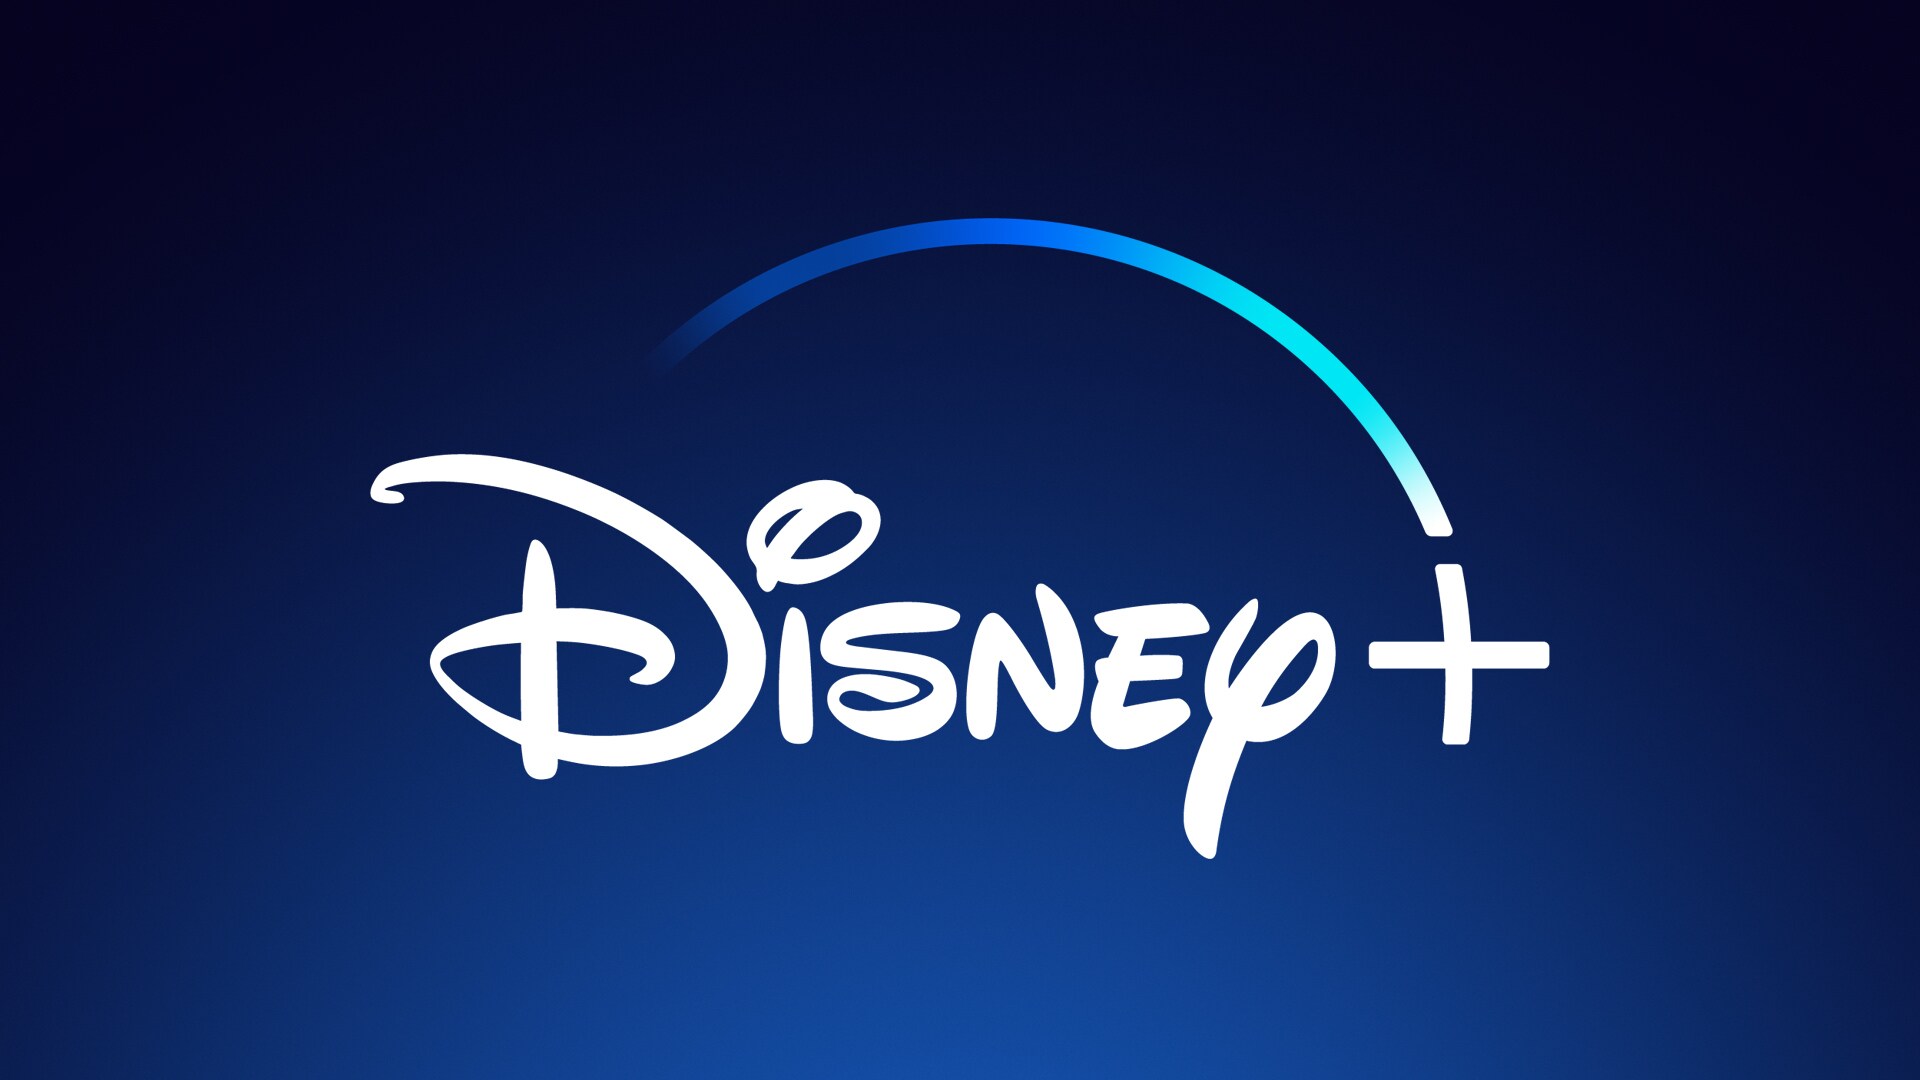 Disney+ To Unleash Comedic Mayhem This Holiday Season With 20th Century Studios’ “Home Sweet Home Alone”